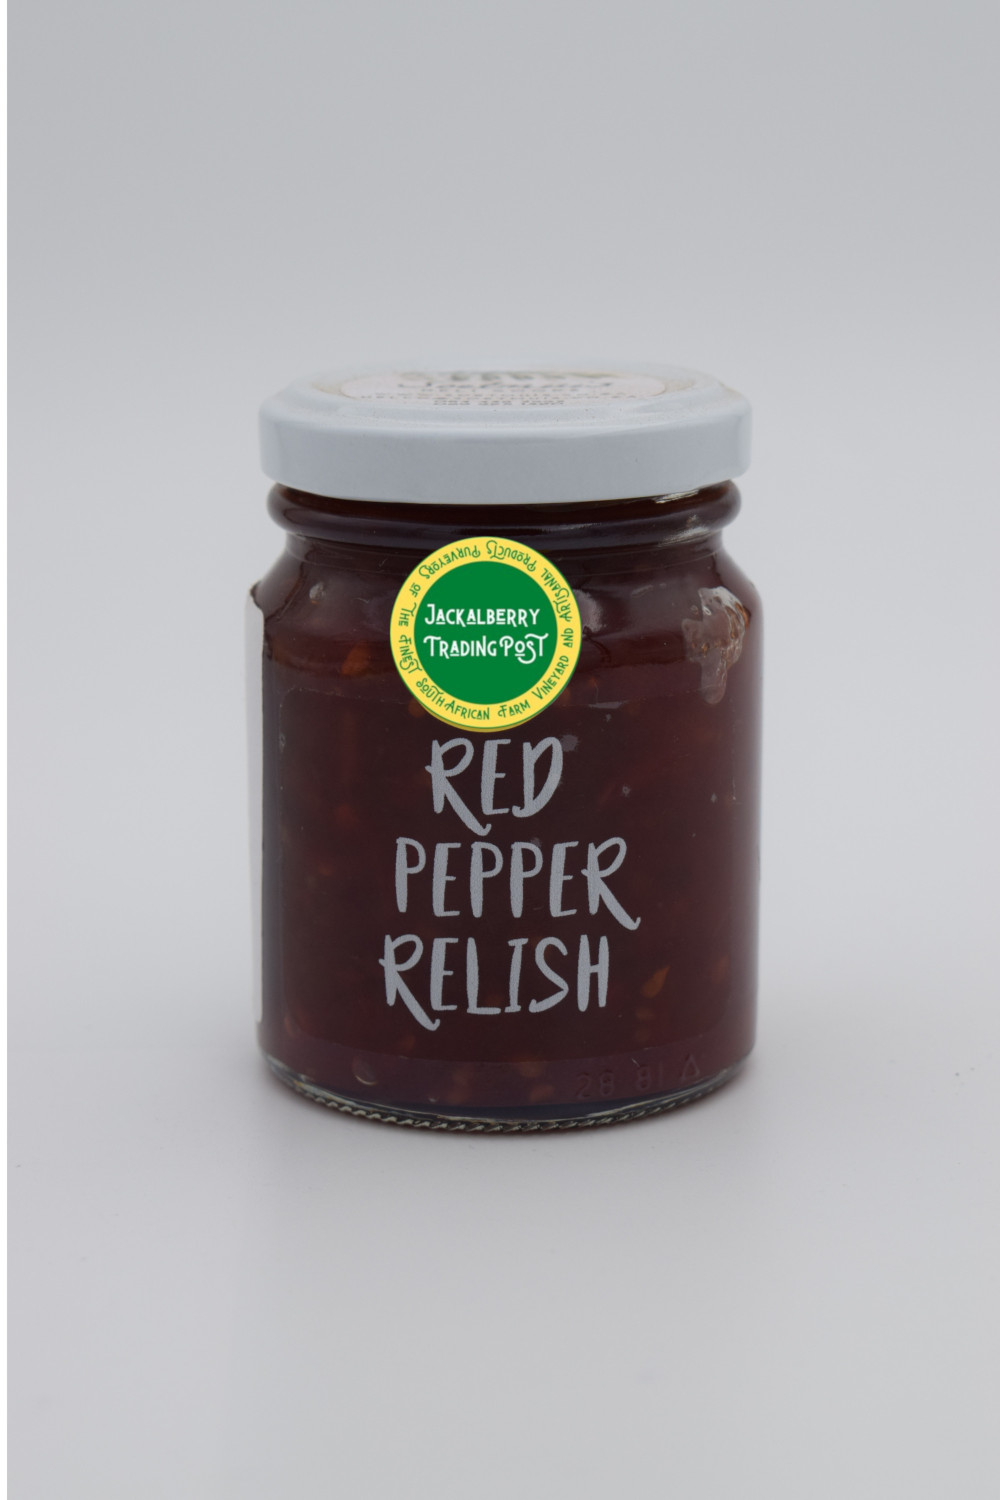 Soetmuis Deli Goods Red Pepper Relish